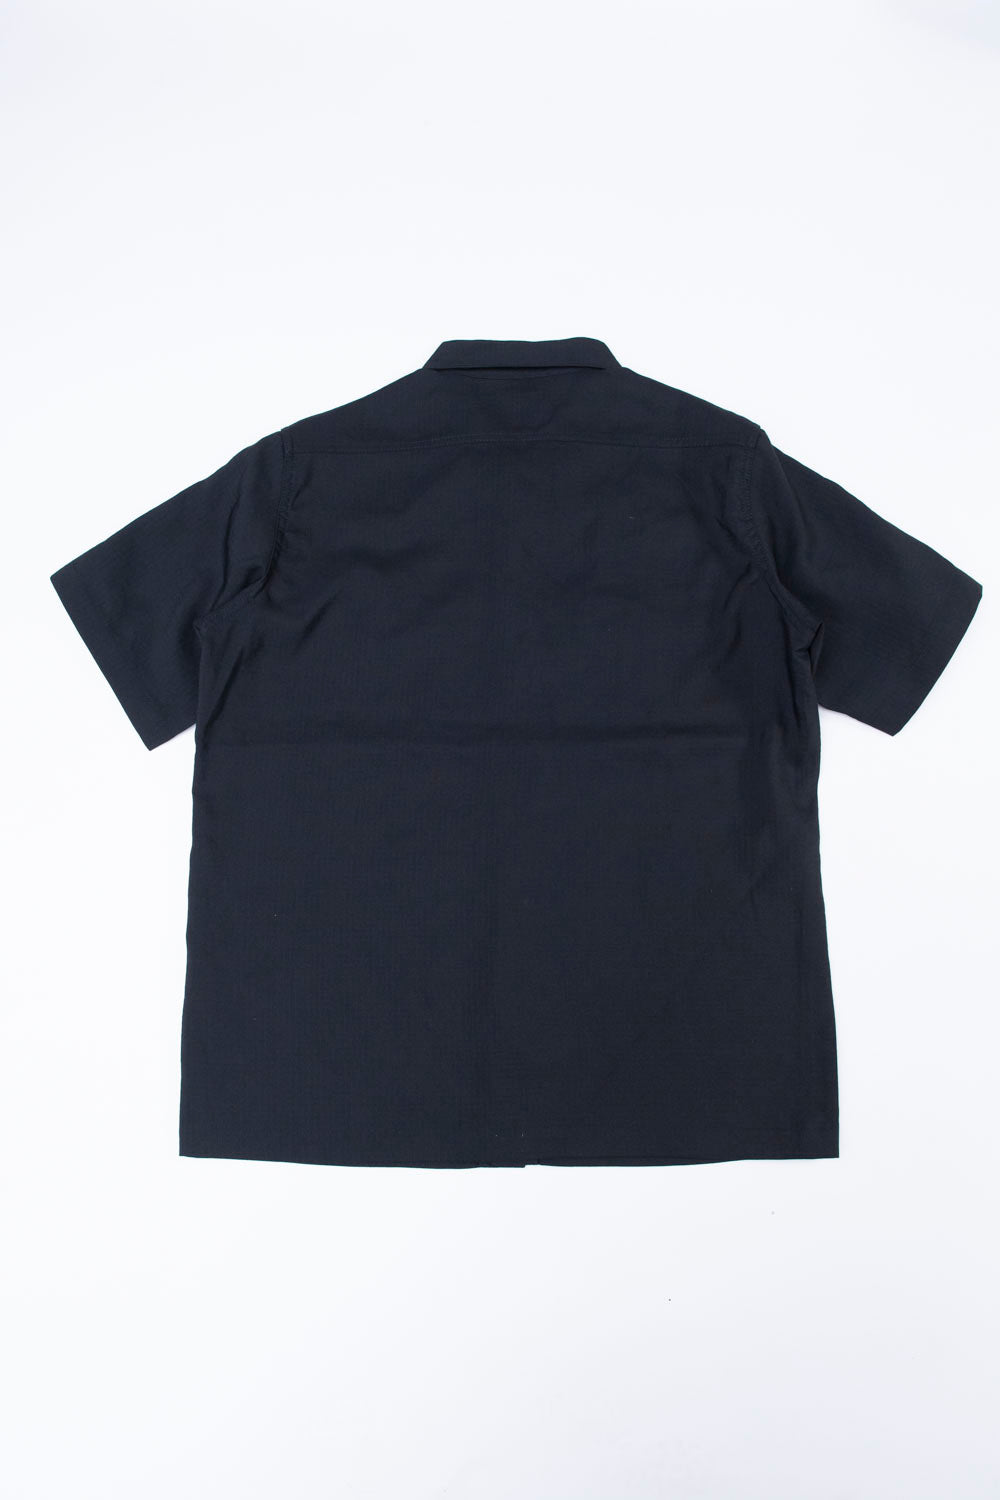 IHSH-286-BLK - Ripstop Short Sleeved Mechanic Shirt - Black